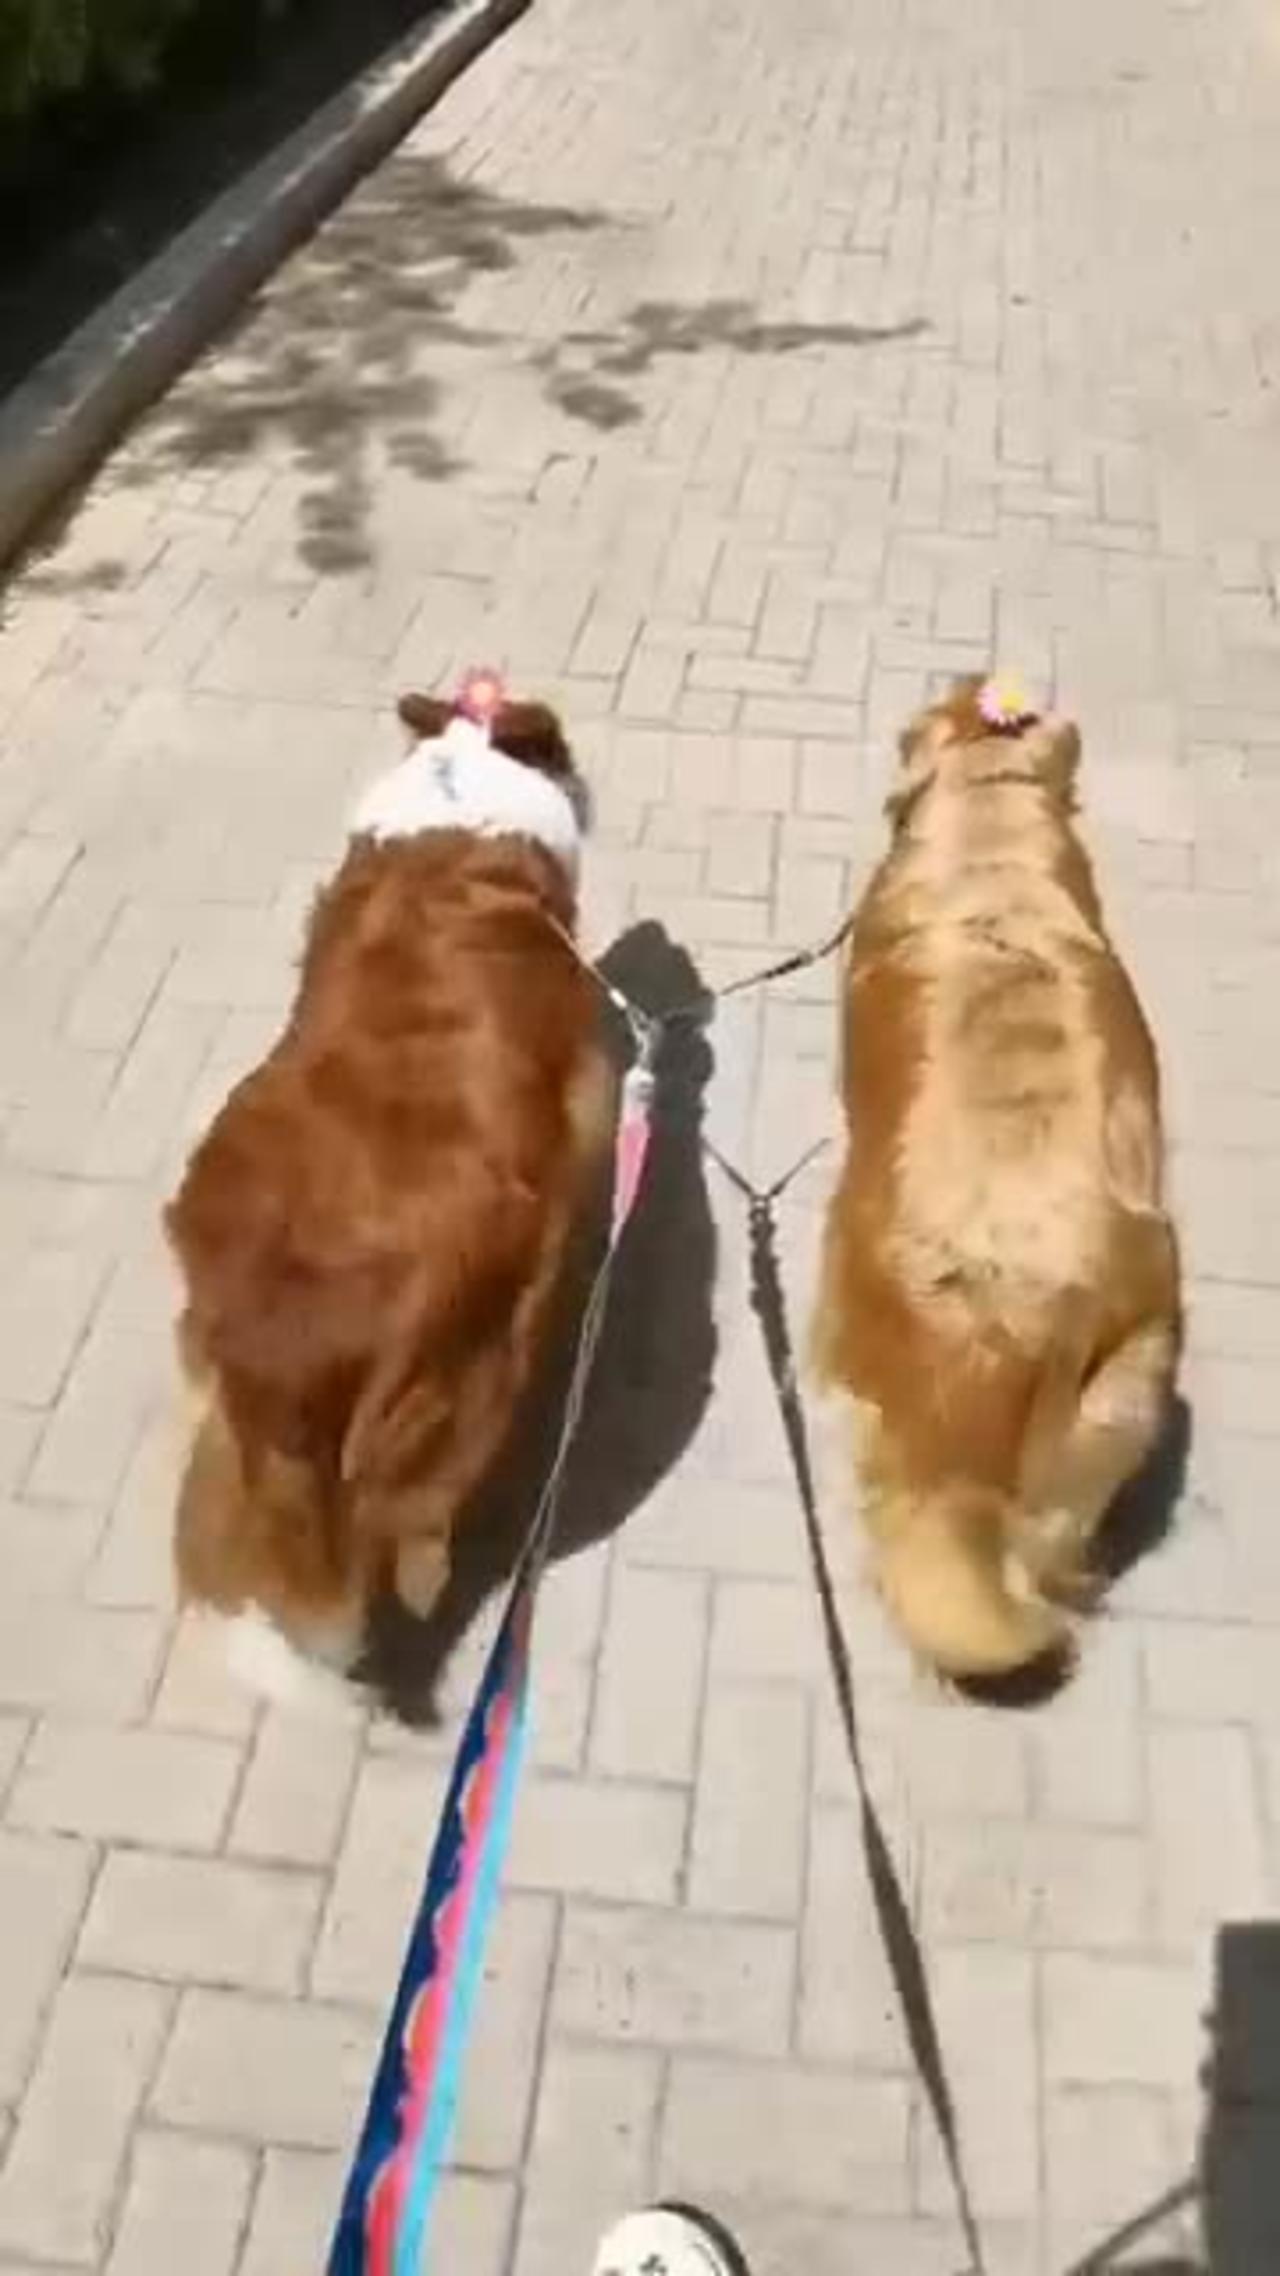 Dog&cat funny videos 😆😁😂